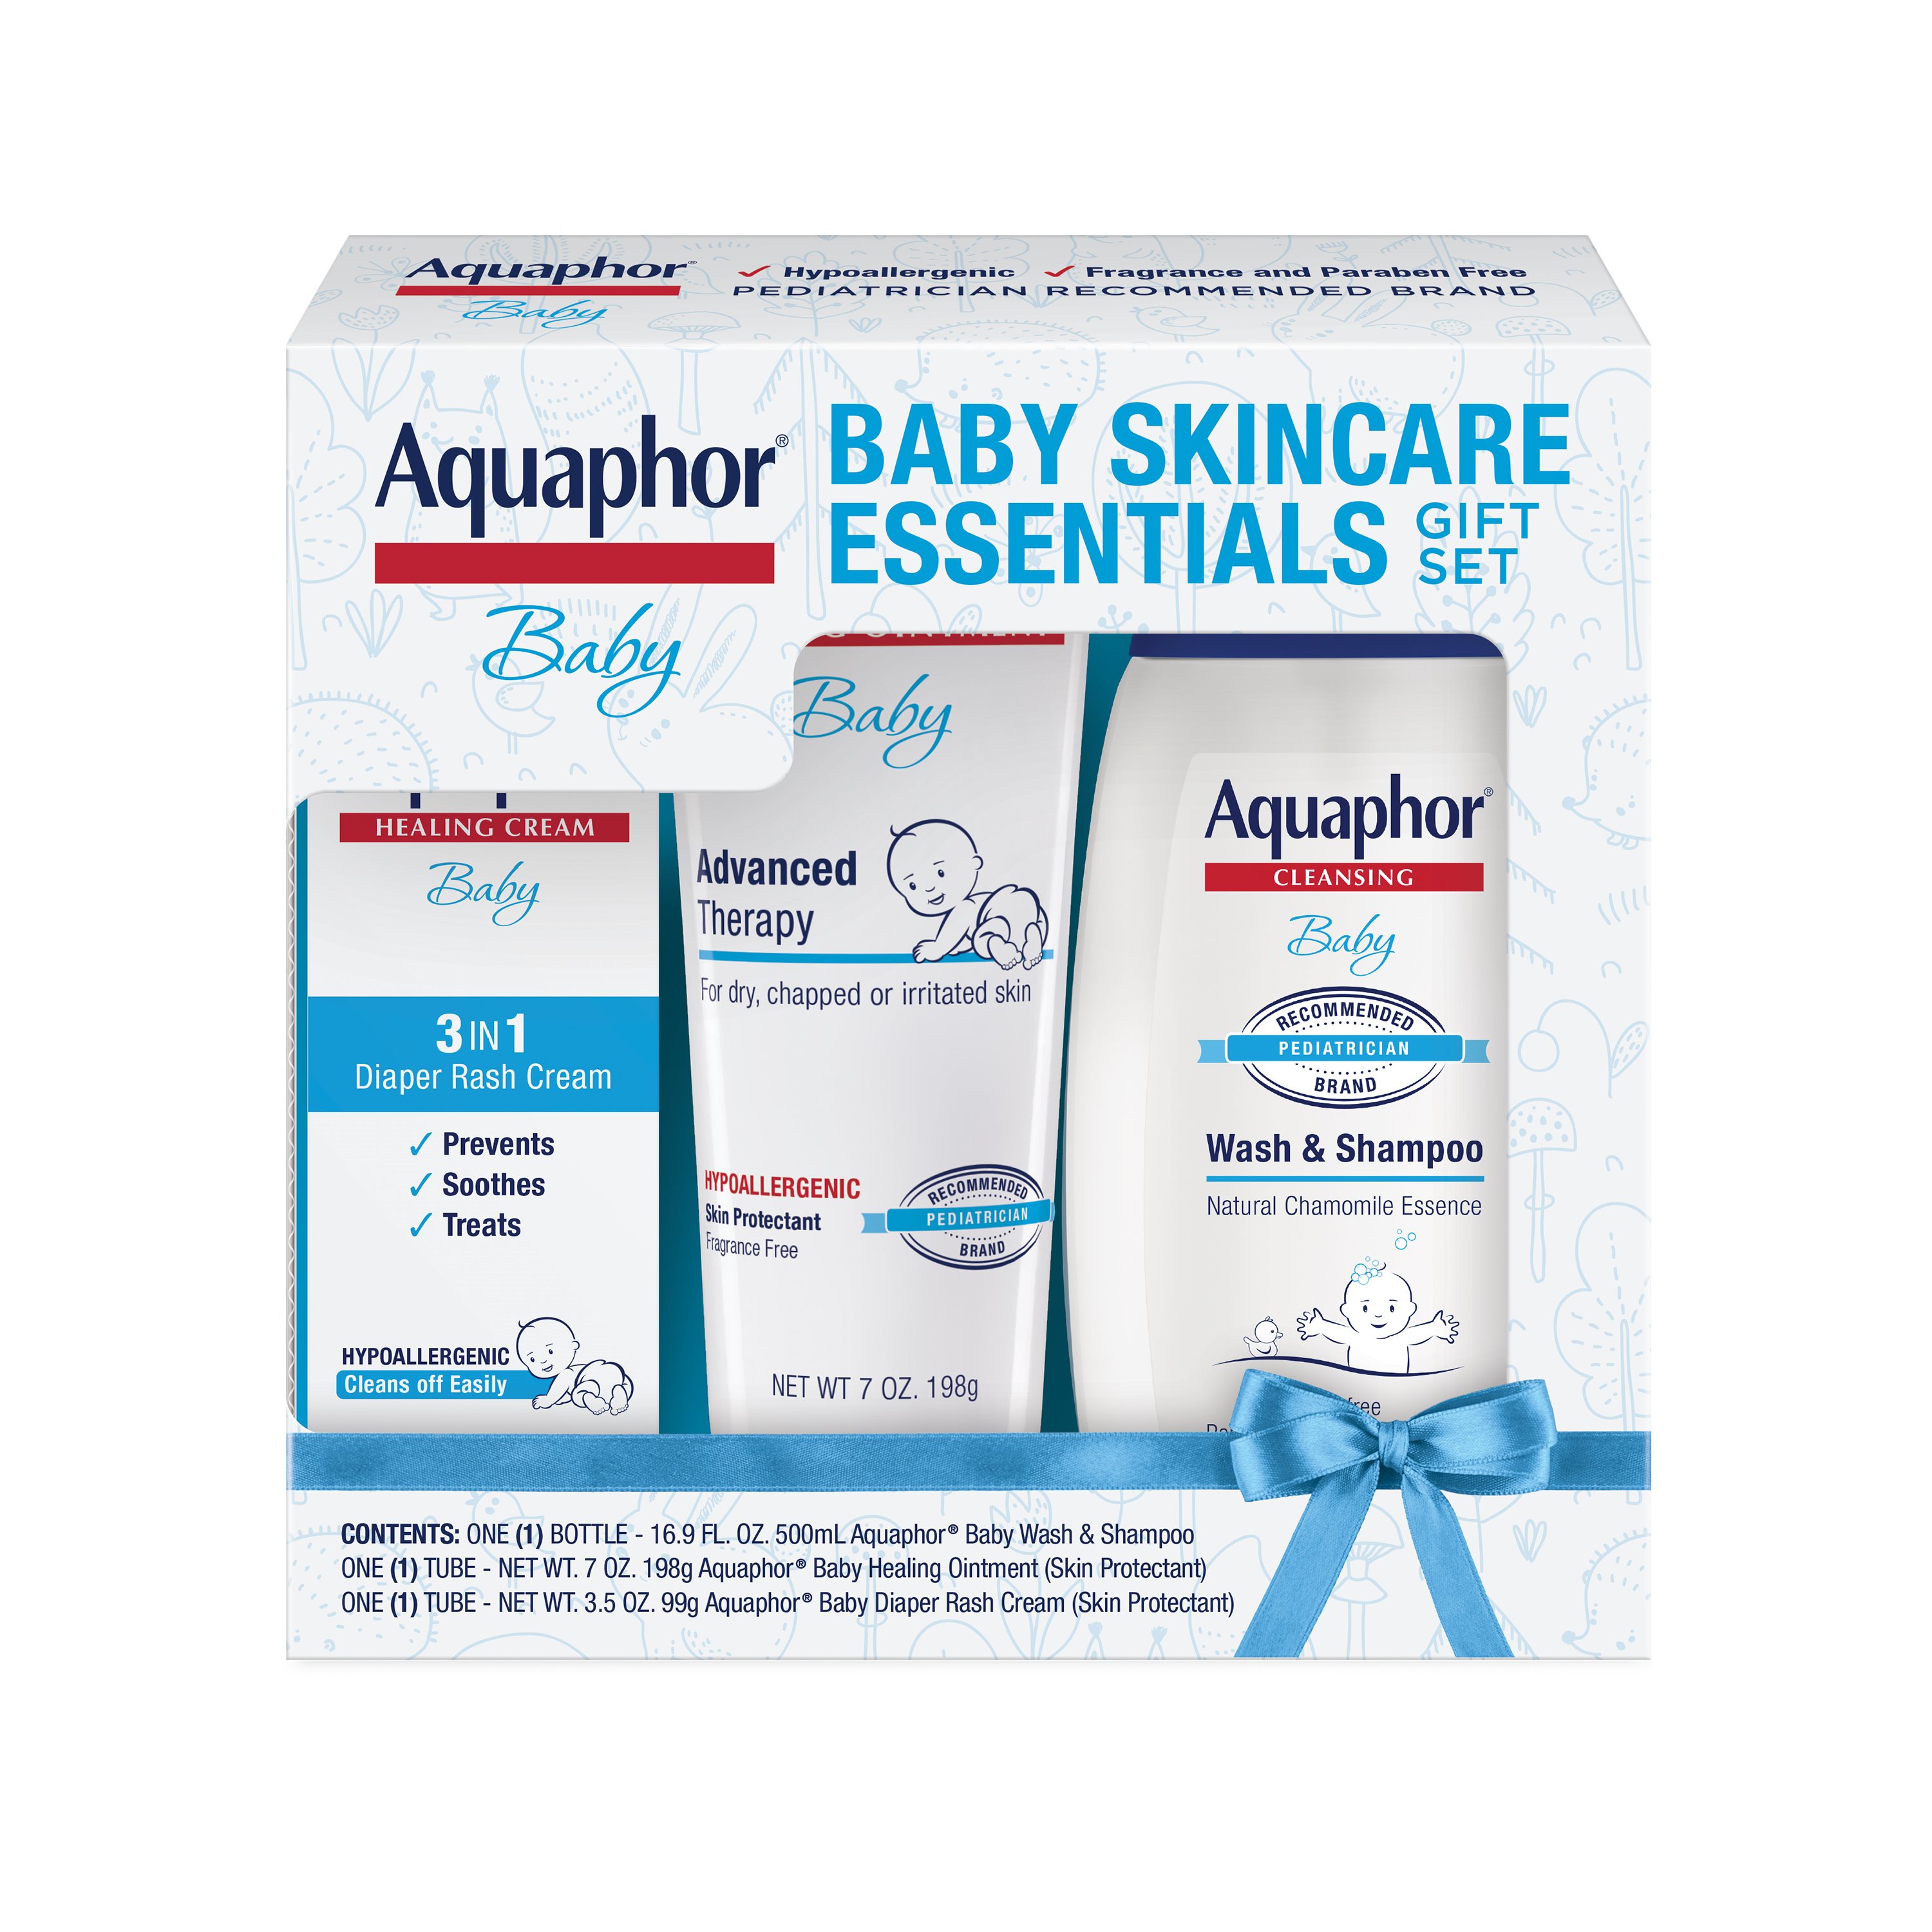 Aquaphor® Baby Skincare Essentials Gift Set